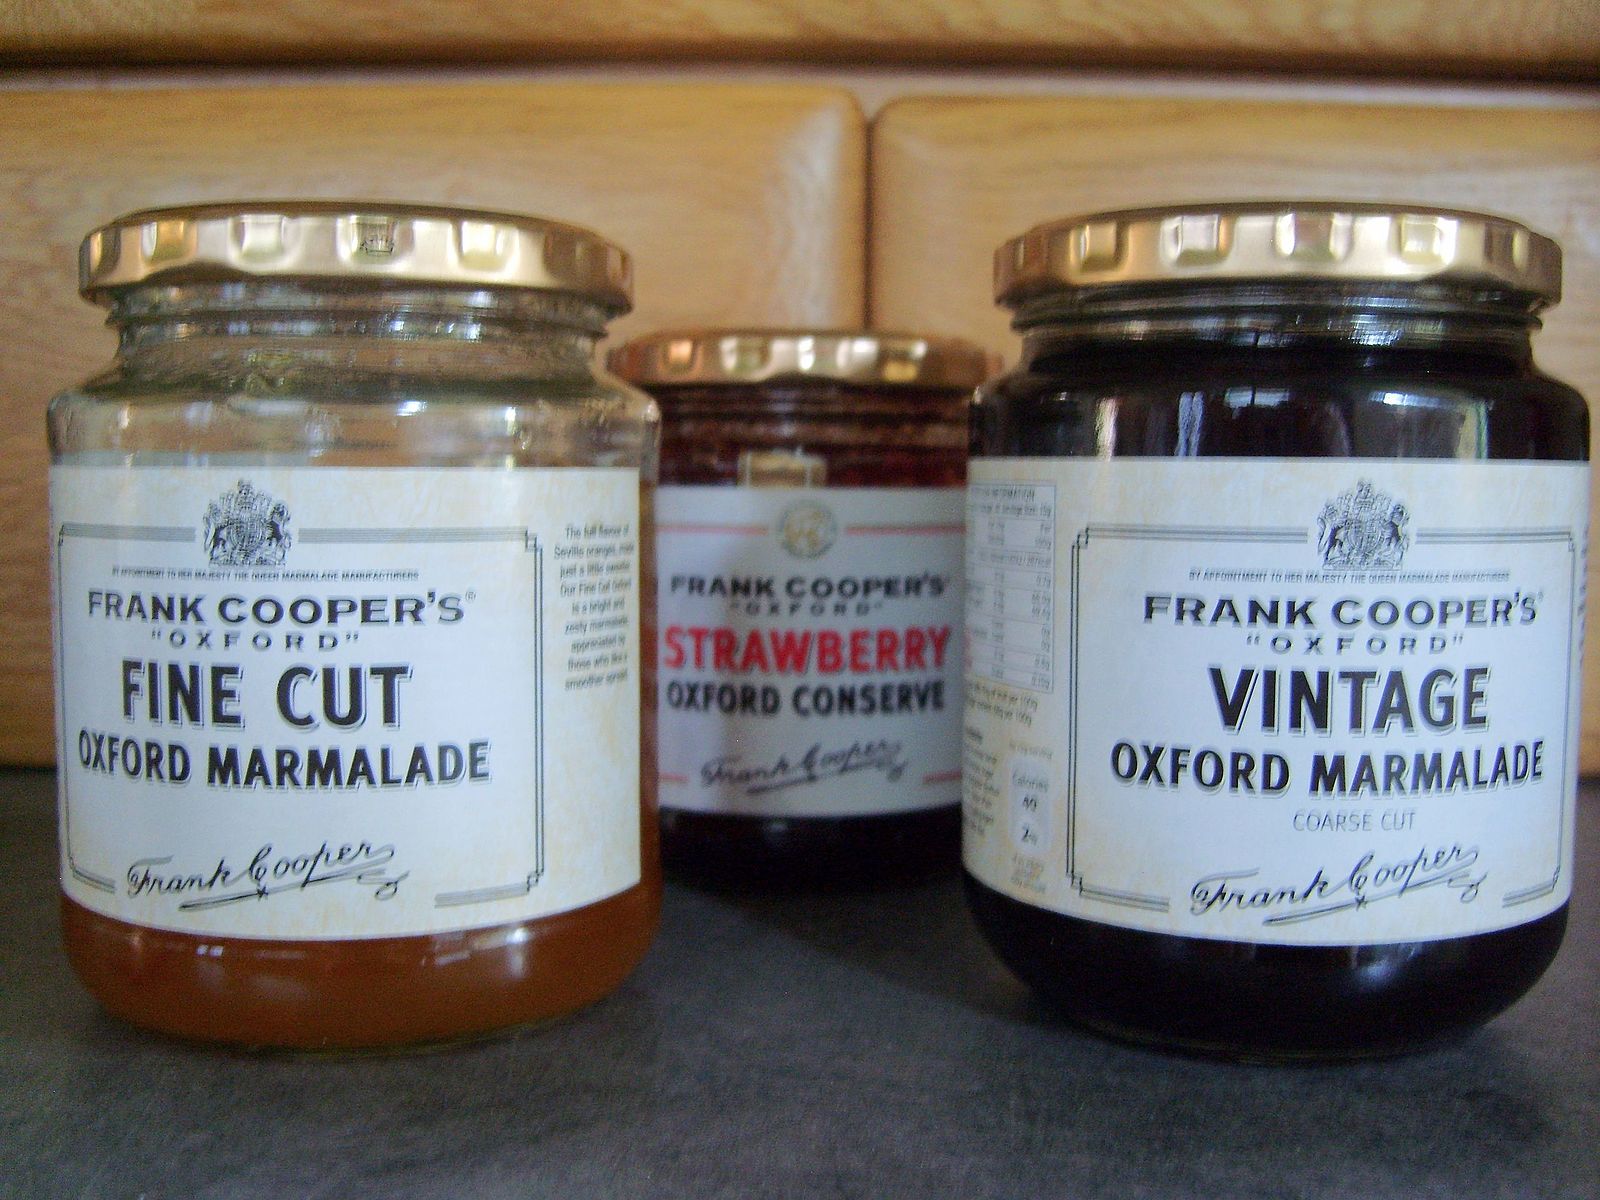 Frank Cooper’s Original Oxford Marmalade: A Culinary Journey Through Time